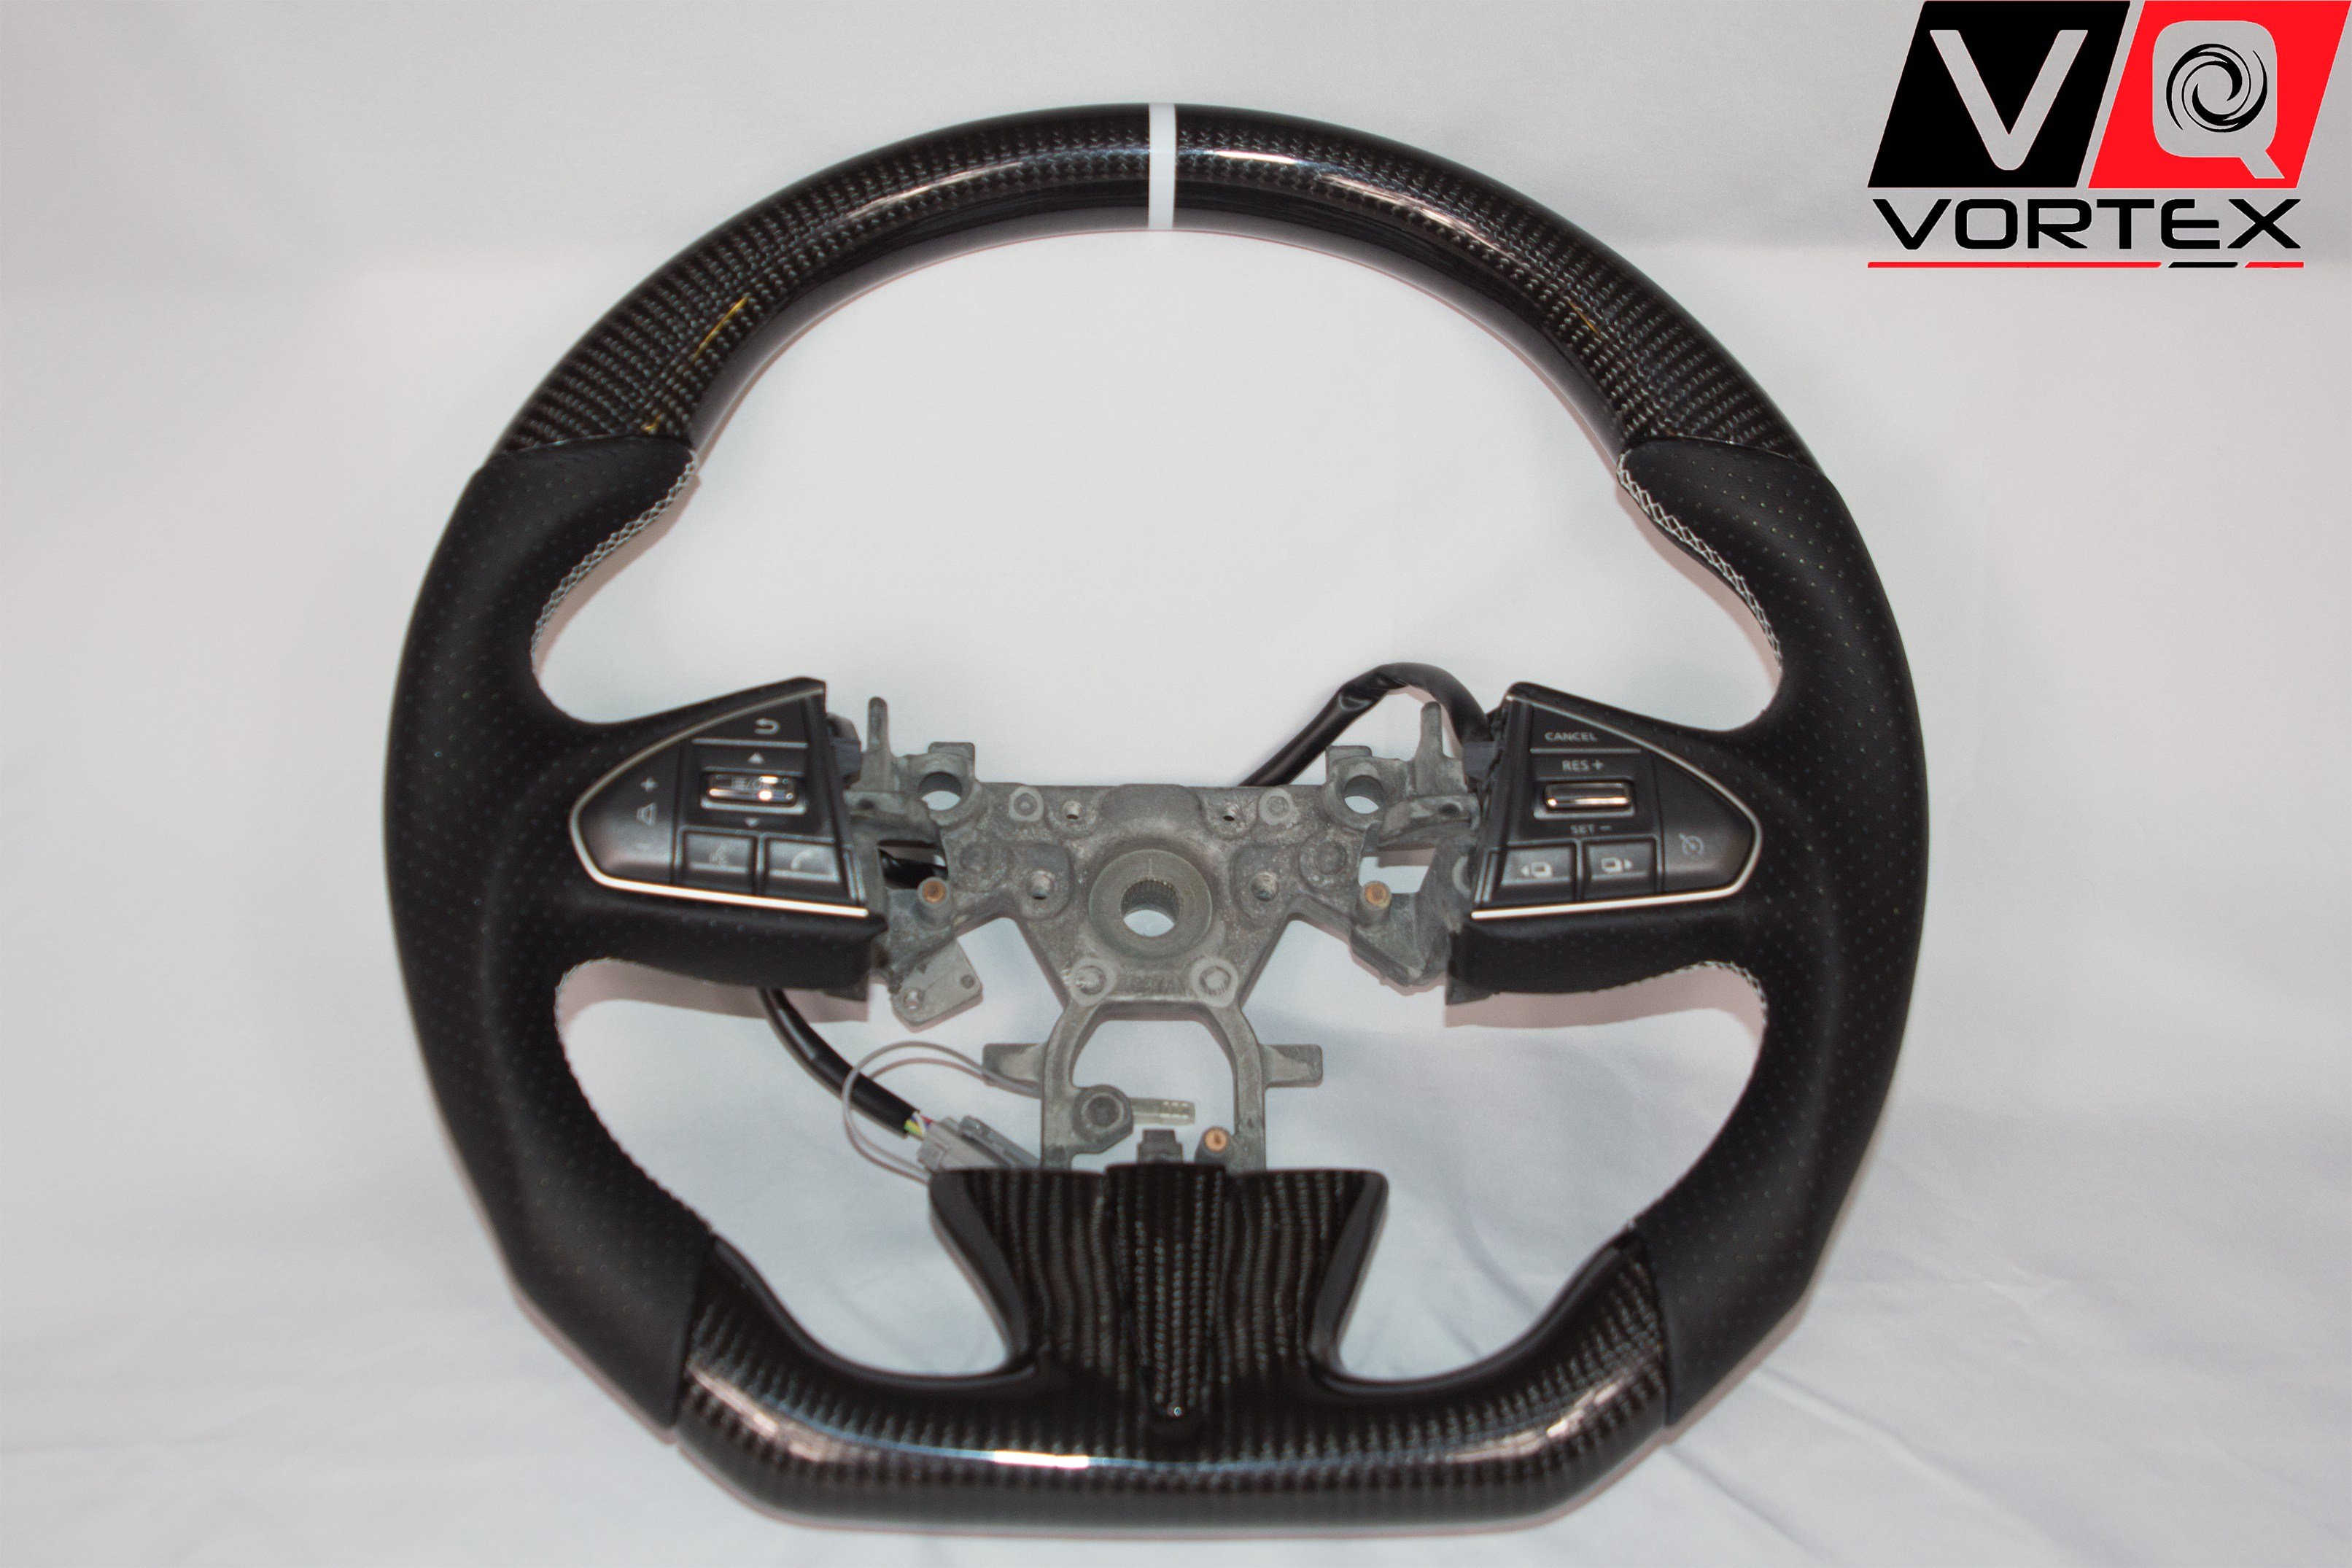 Infiniti Q50 (2014+) Carbon Fiber Flat Bottom Steering Wheel – VQ Vortex